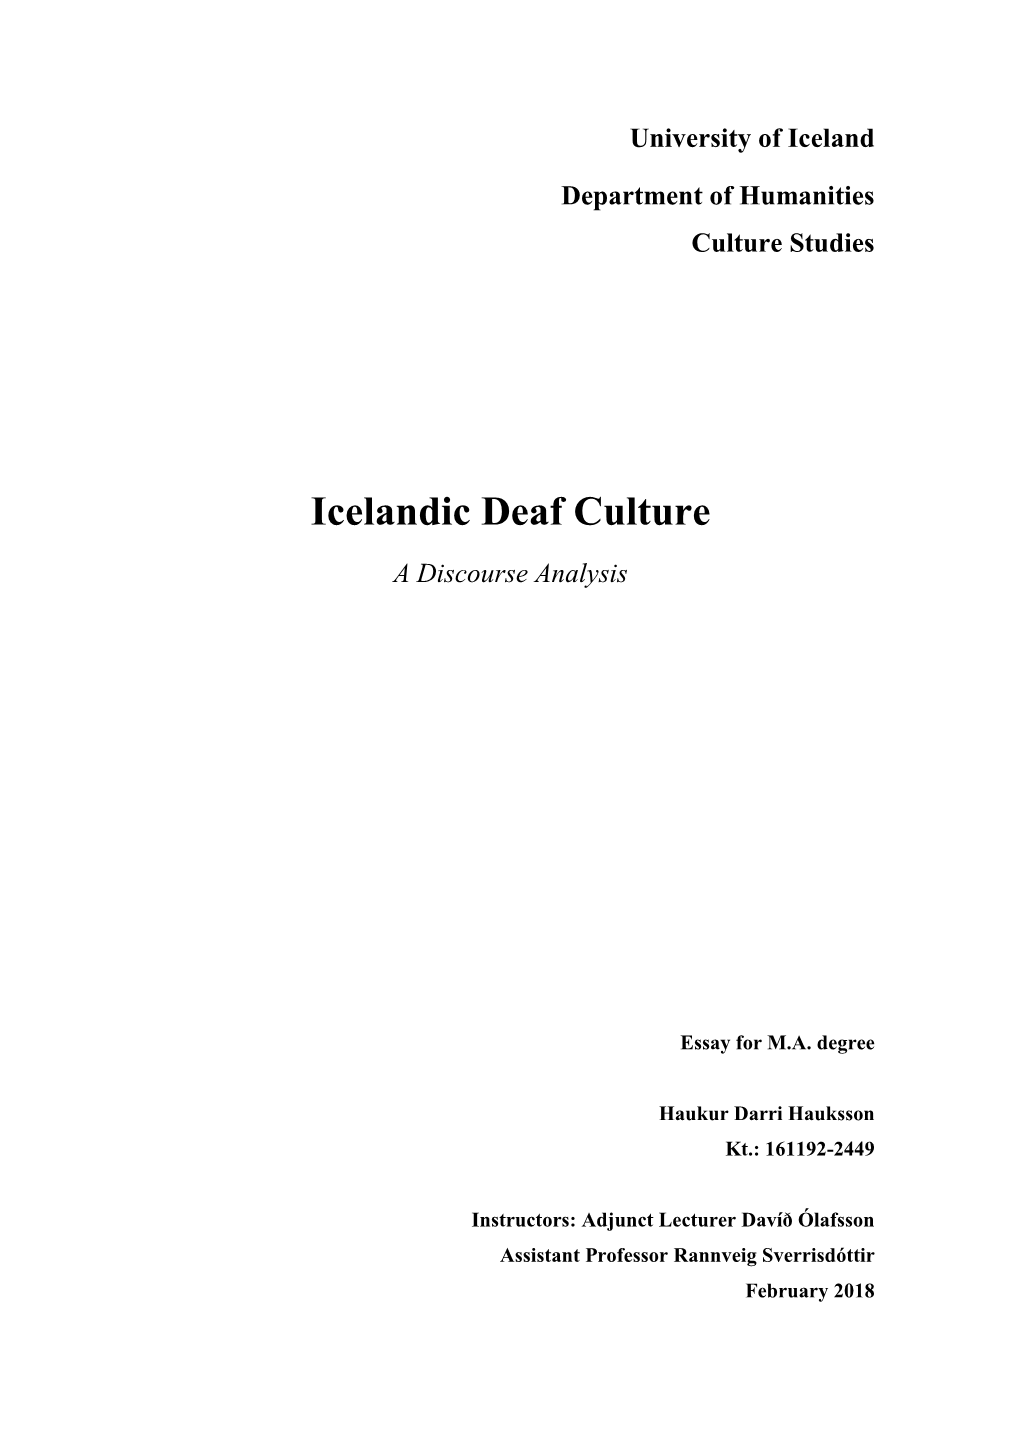 Icelandic Deaf Culture a Discourse Analysis